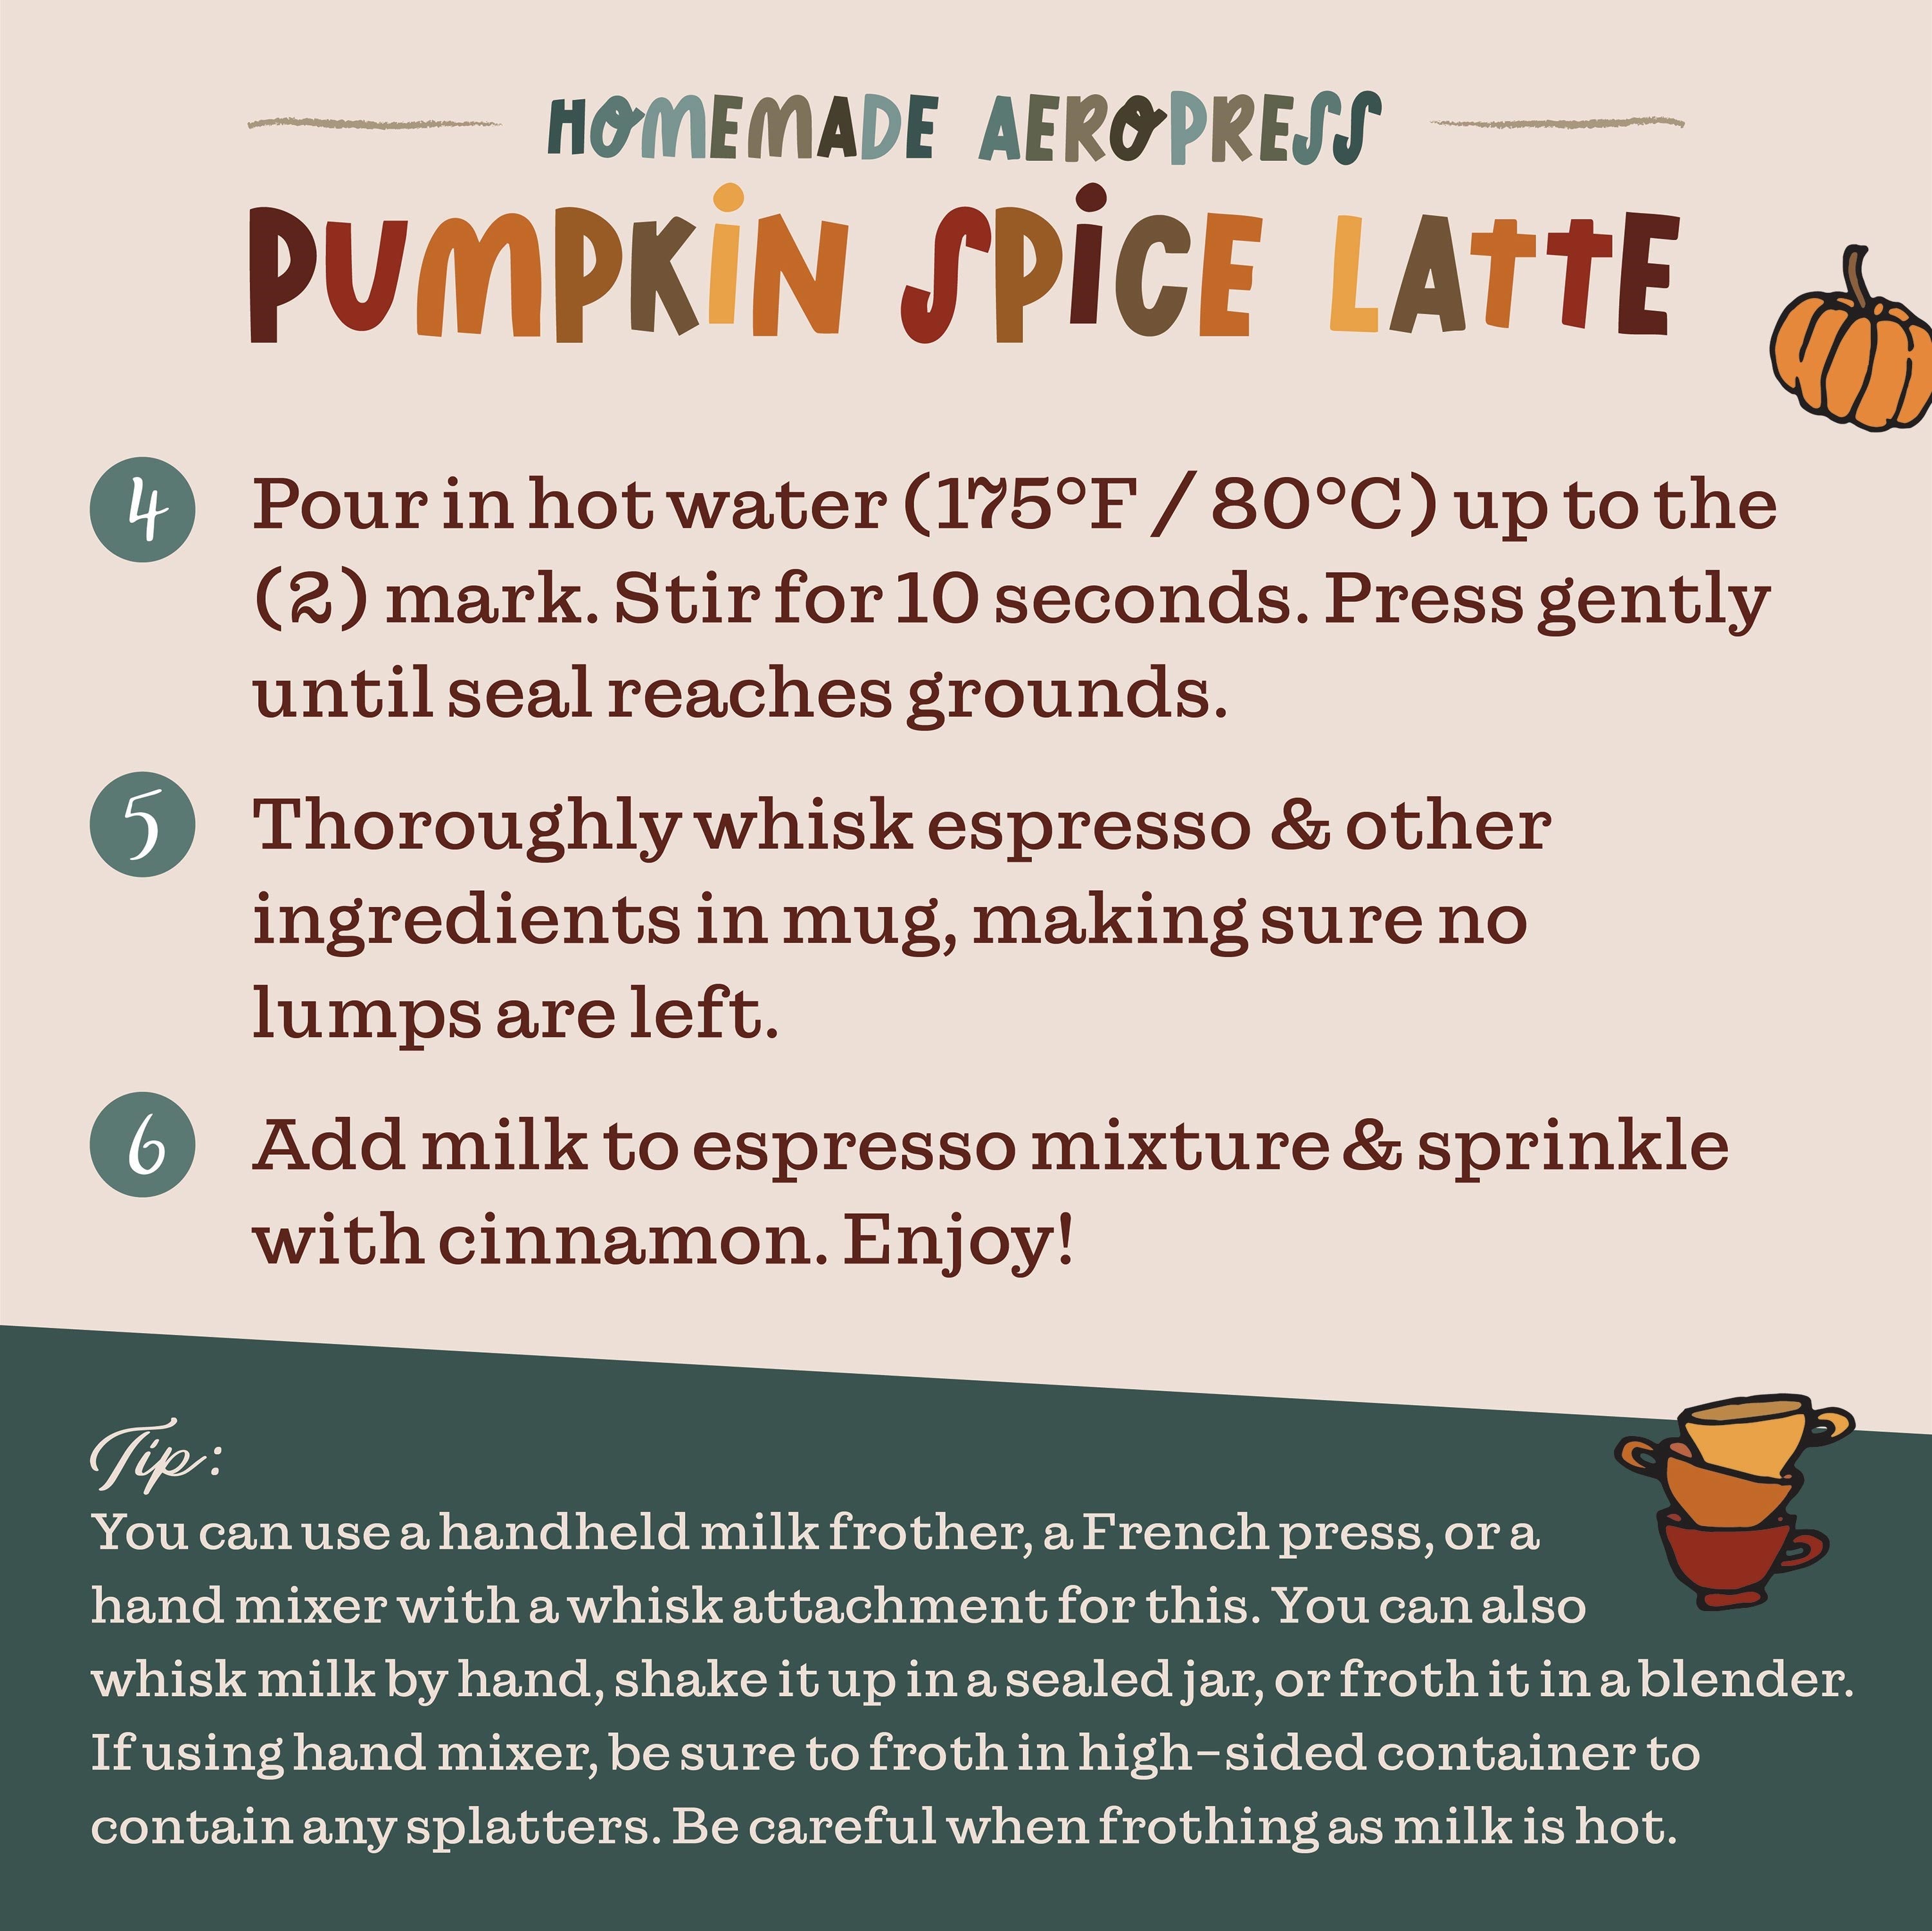 Steps 4 through 6 to make a pumpkin spice latte with an AeroPress coffee maker